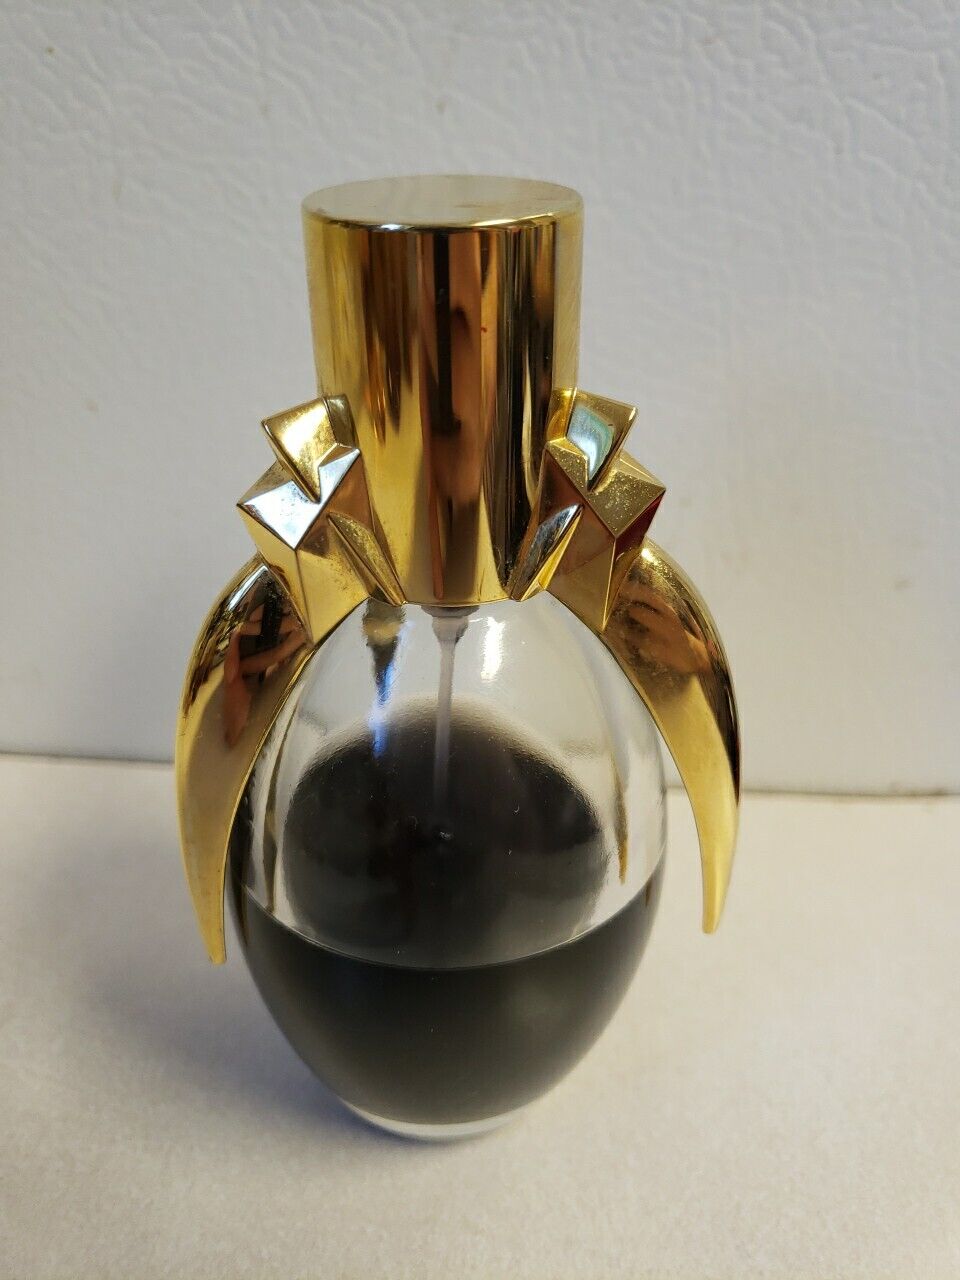 Discontinued Lady Gaga Fame women's eau de perfume Bottle 1 fl oz black liquid